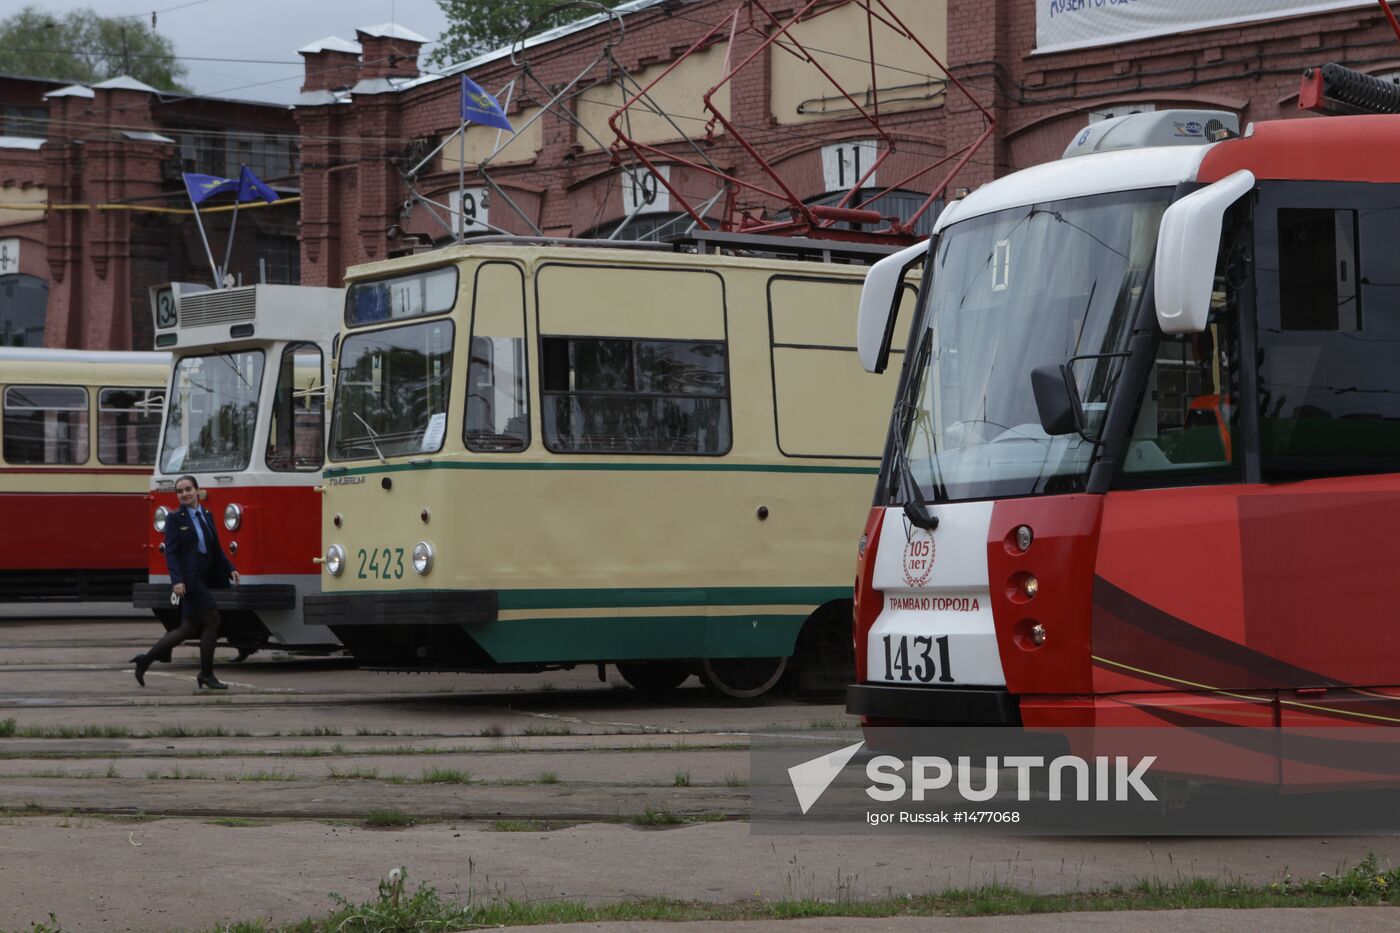 Vintage tram parade to celebrate St. Petersburg's 310th birthday